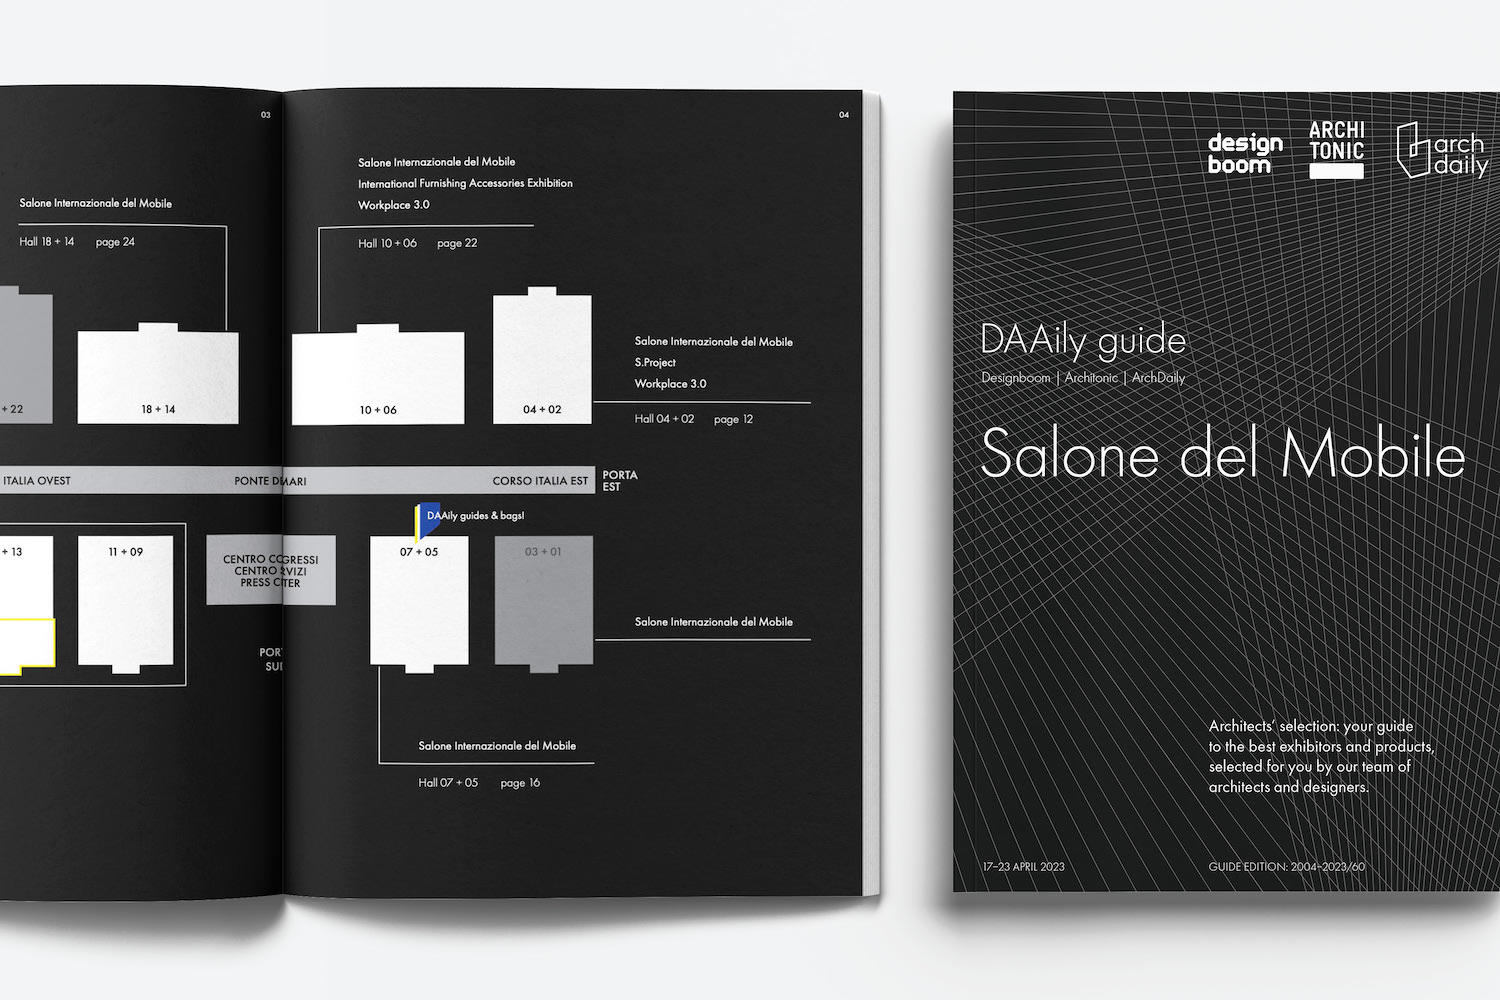 designboom's ultimate guide to milan design week 2022